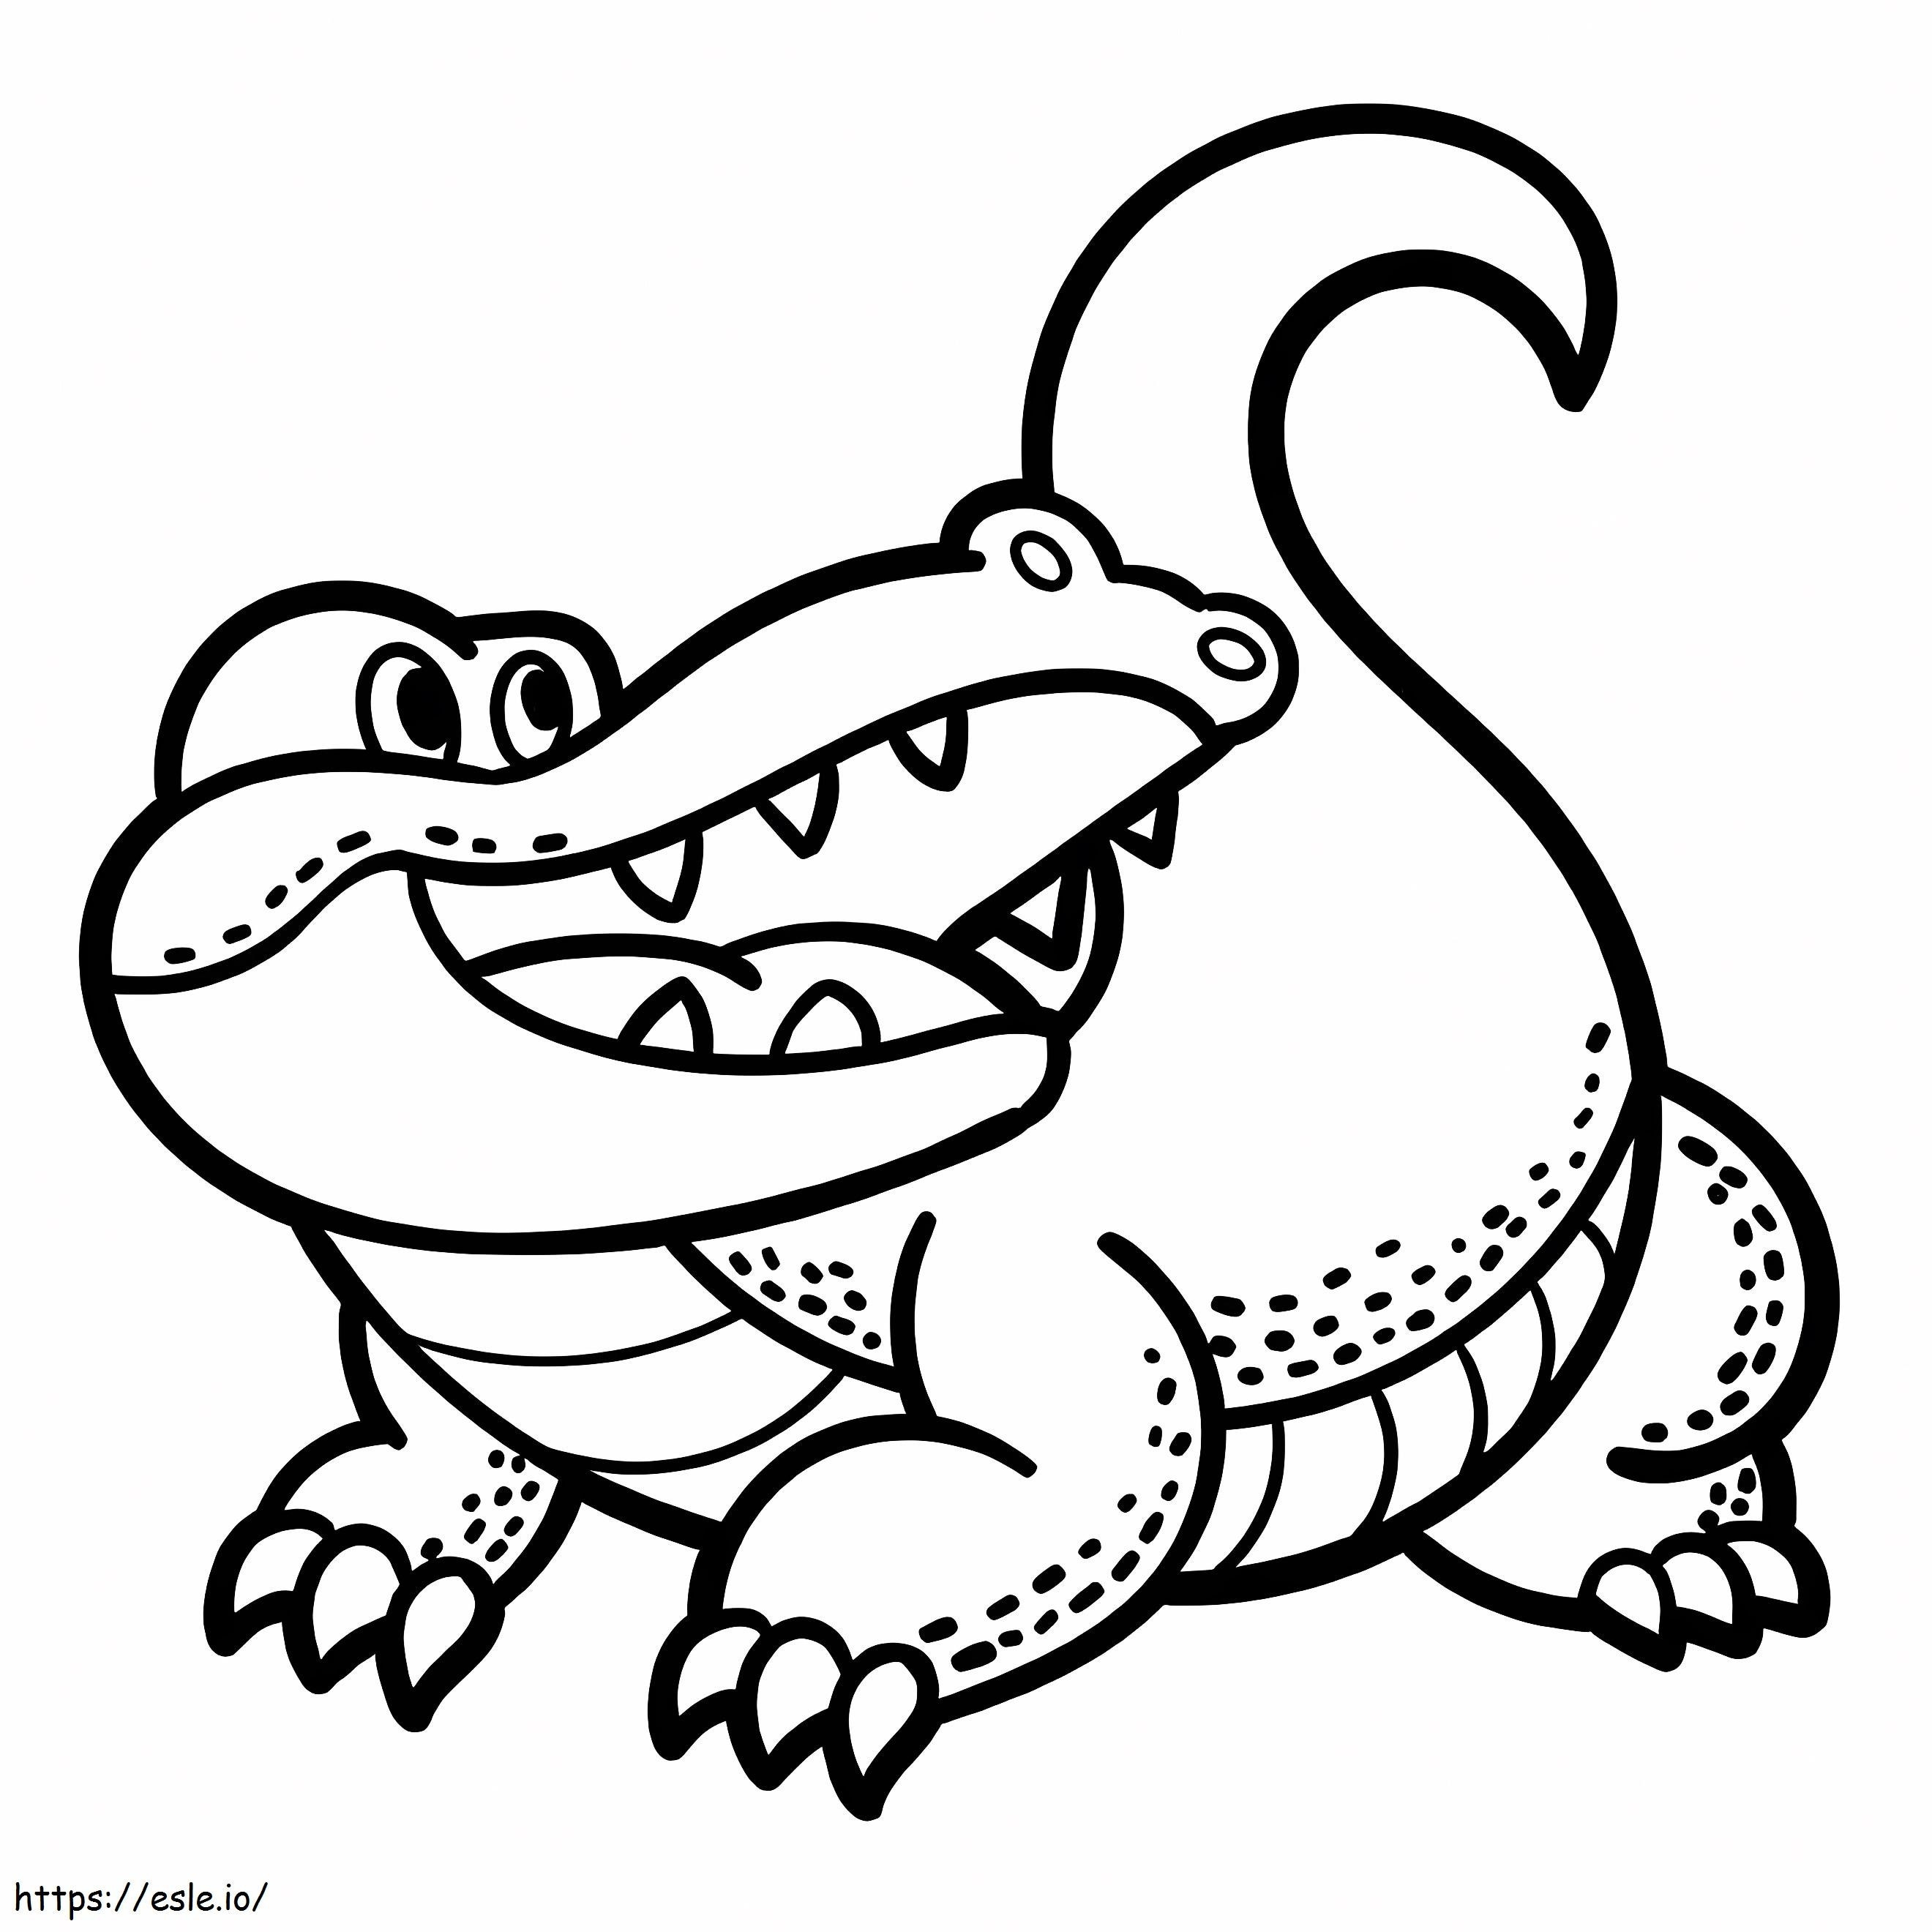 Coloriage Crocodile gratuit imprimable à imprimer dessin